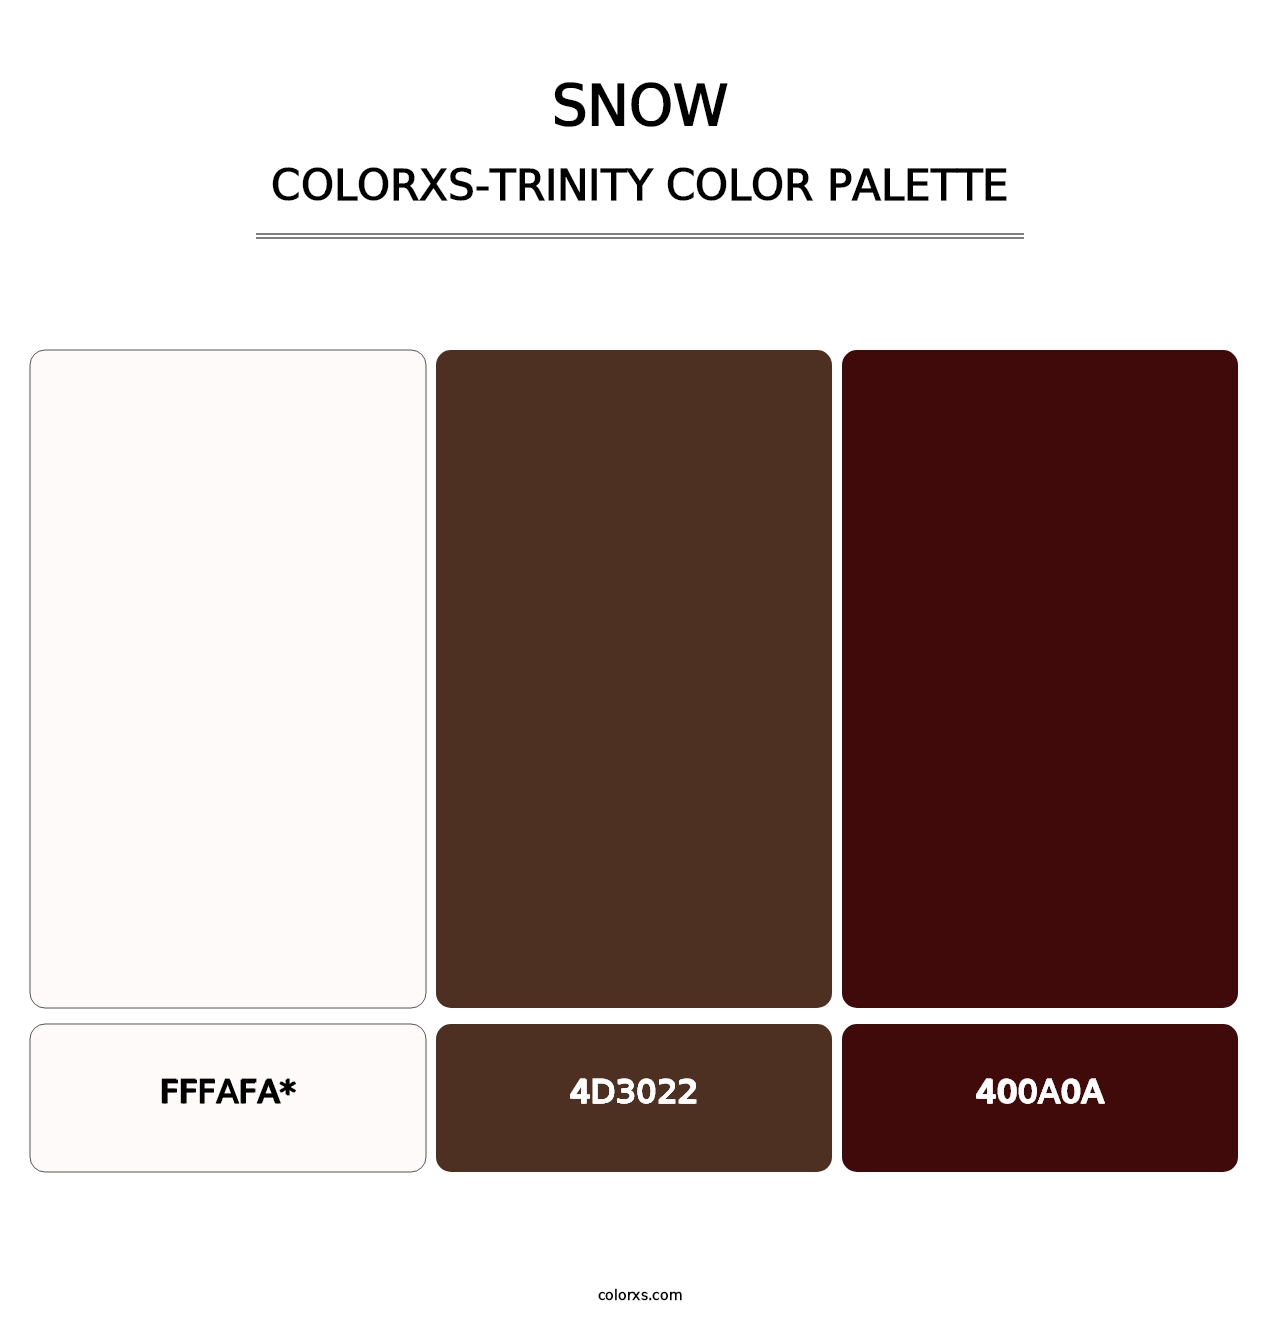 Snow - Colorxs Trinity Palette